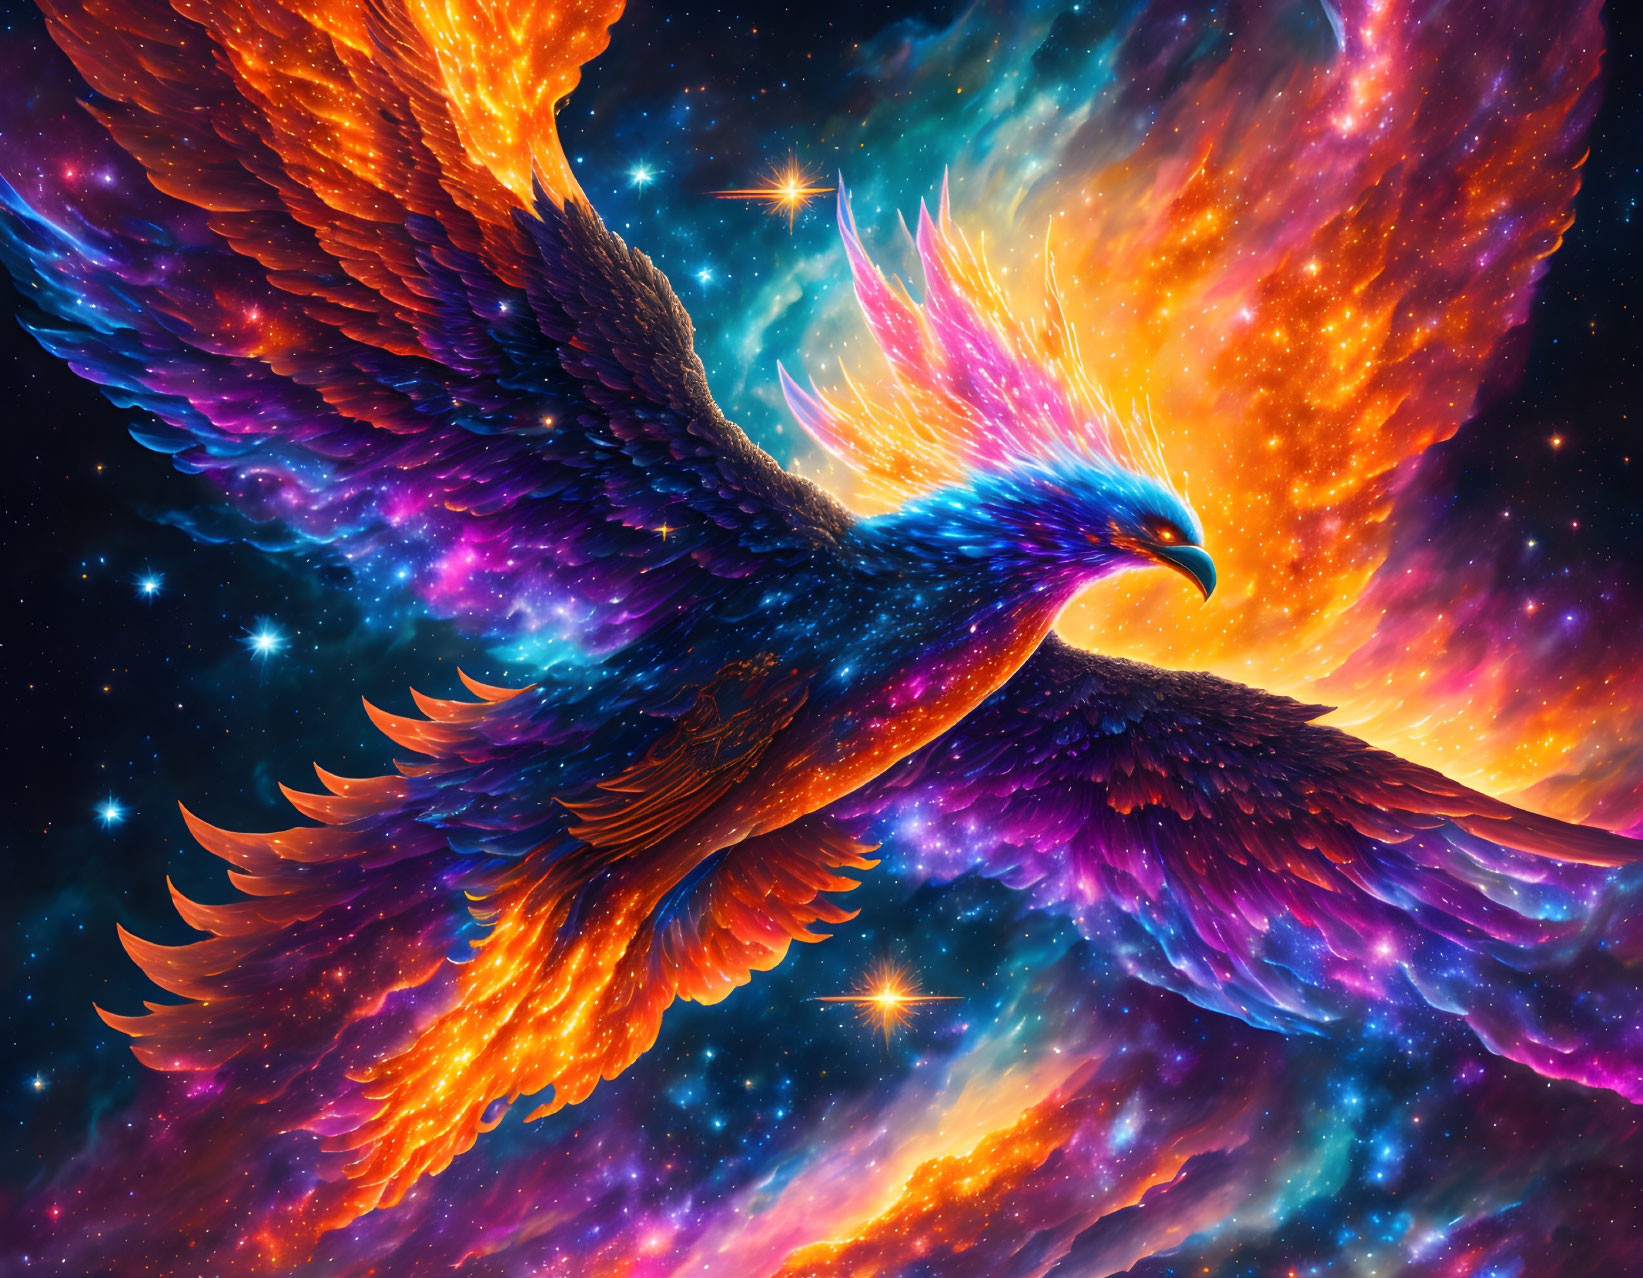 Colorful cosmic phoenix flying through starry nebula